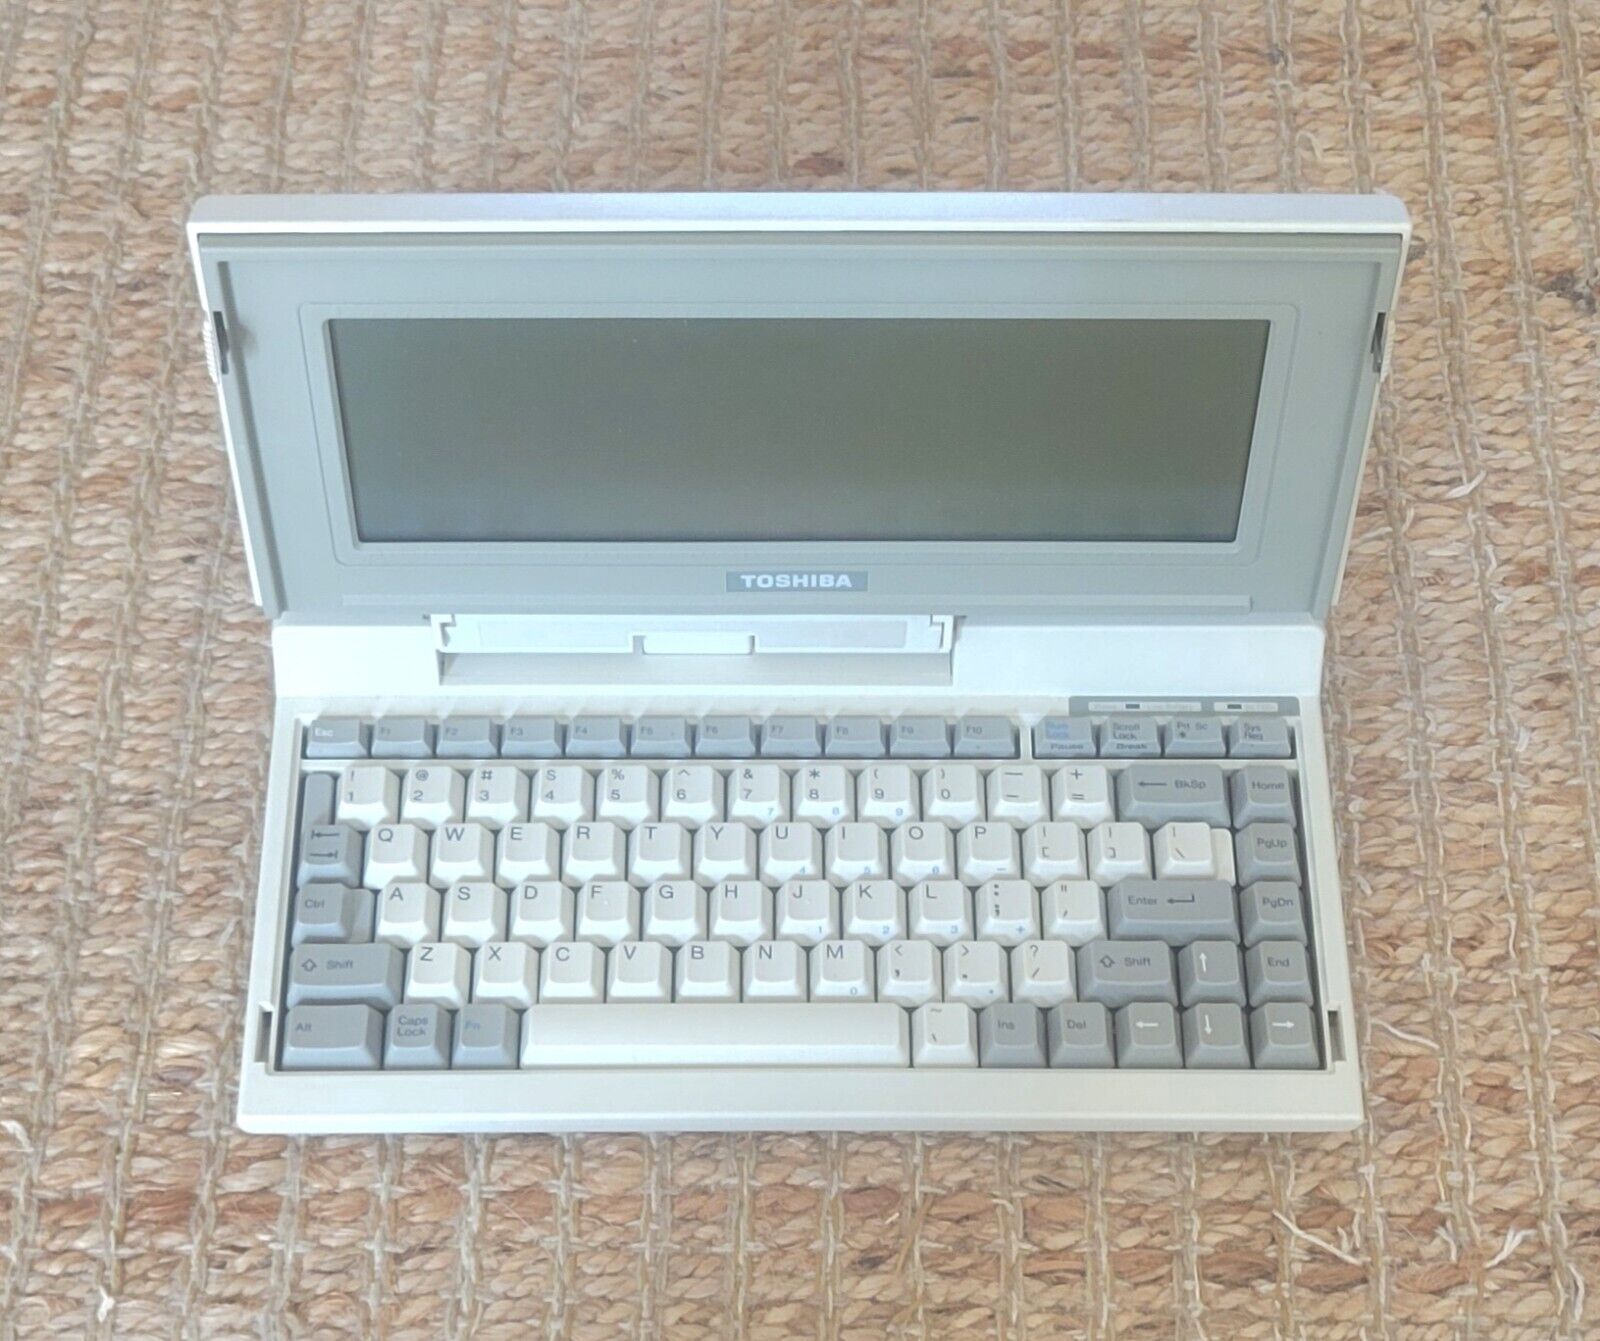 Toshiba T1000SE Rare Vintage Laptop